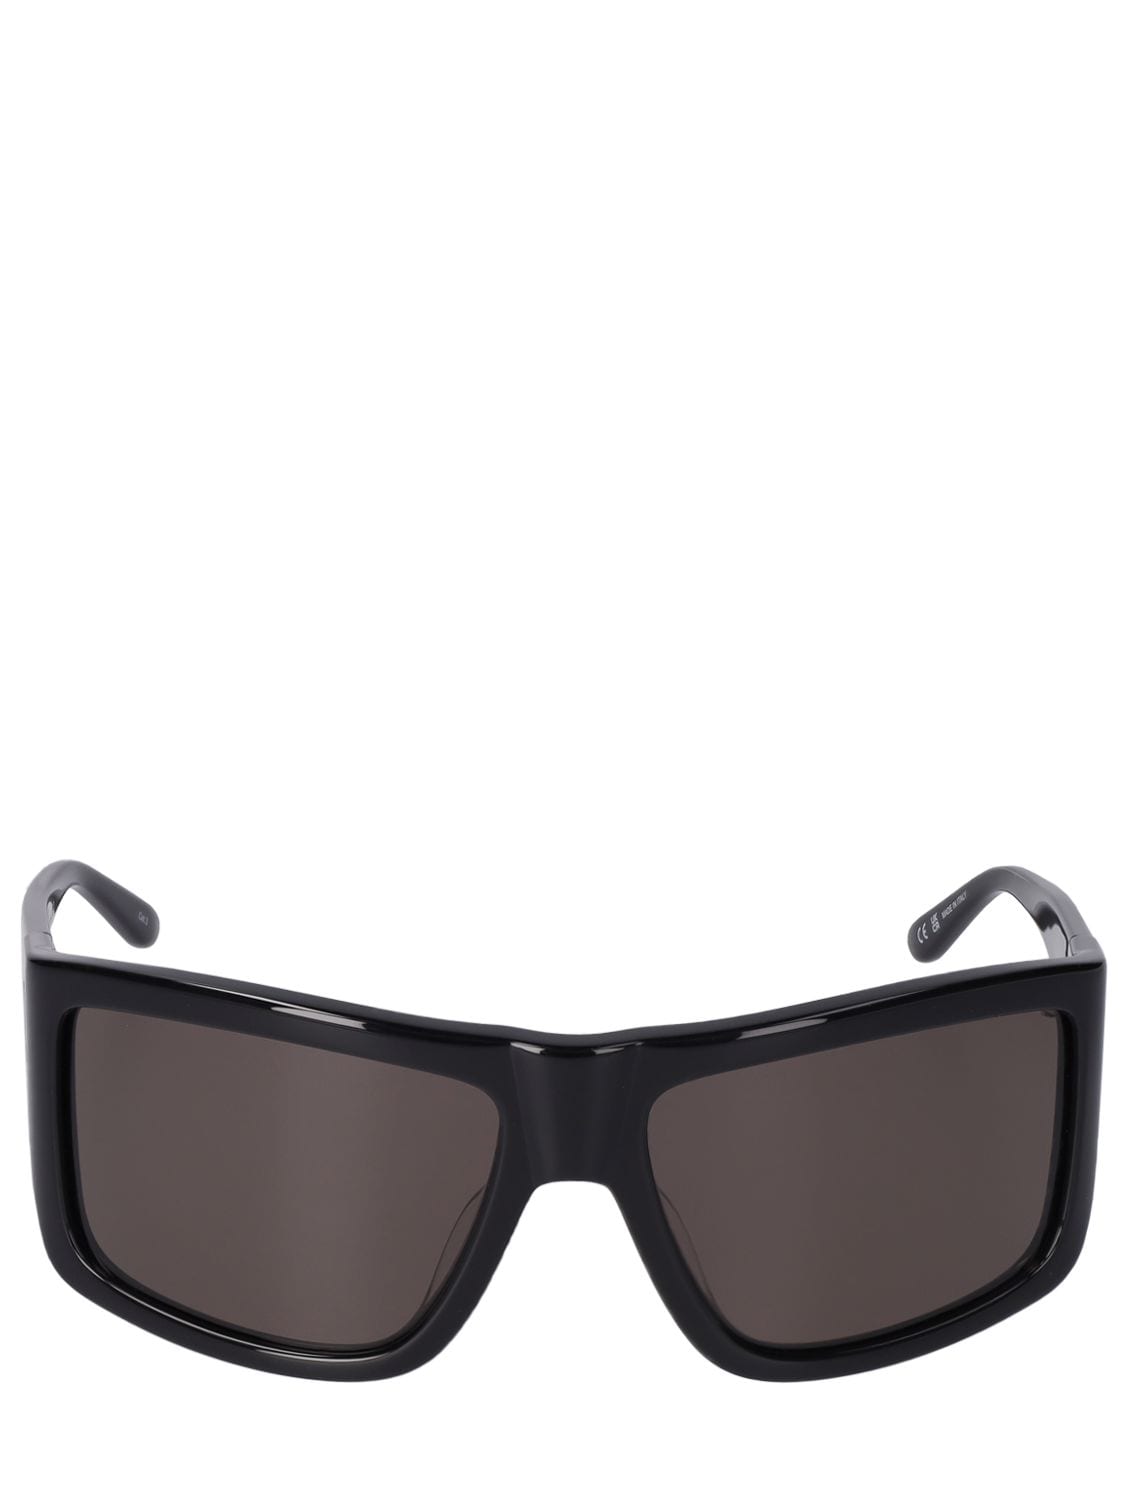 Image of Shock 2 Squared Acetate Sunglasses